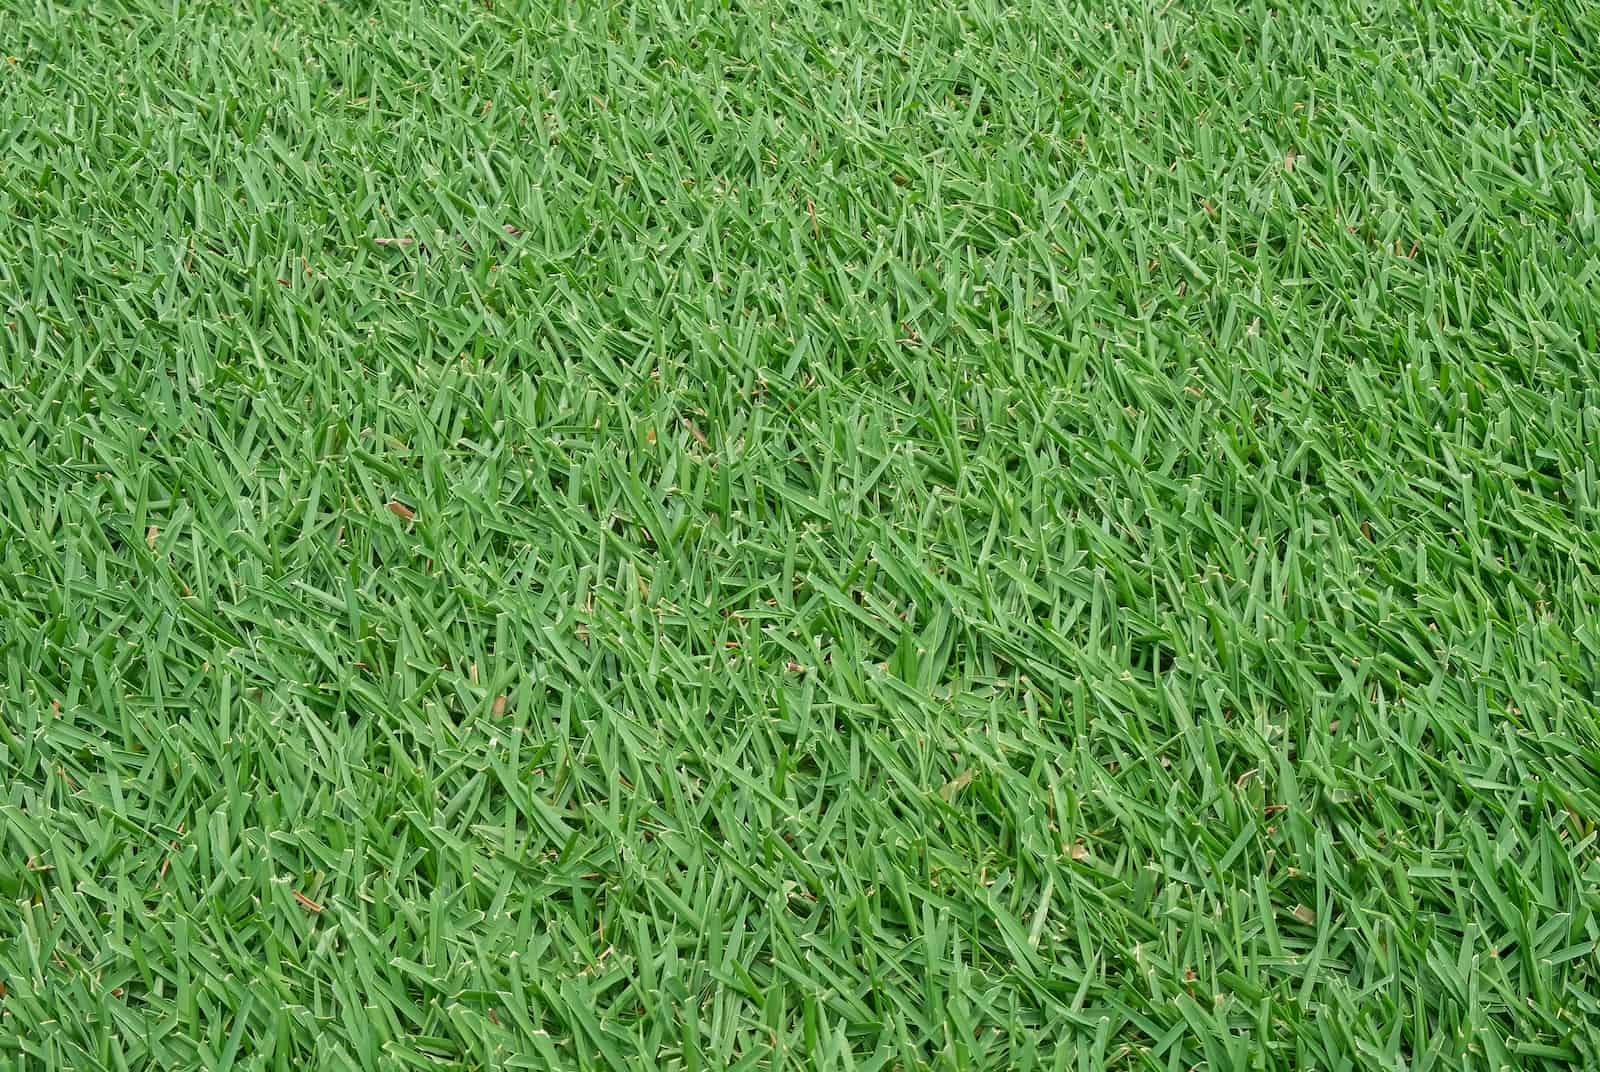 mowed Zoysia grass